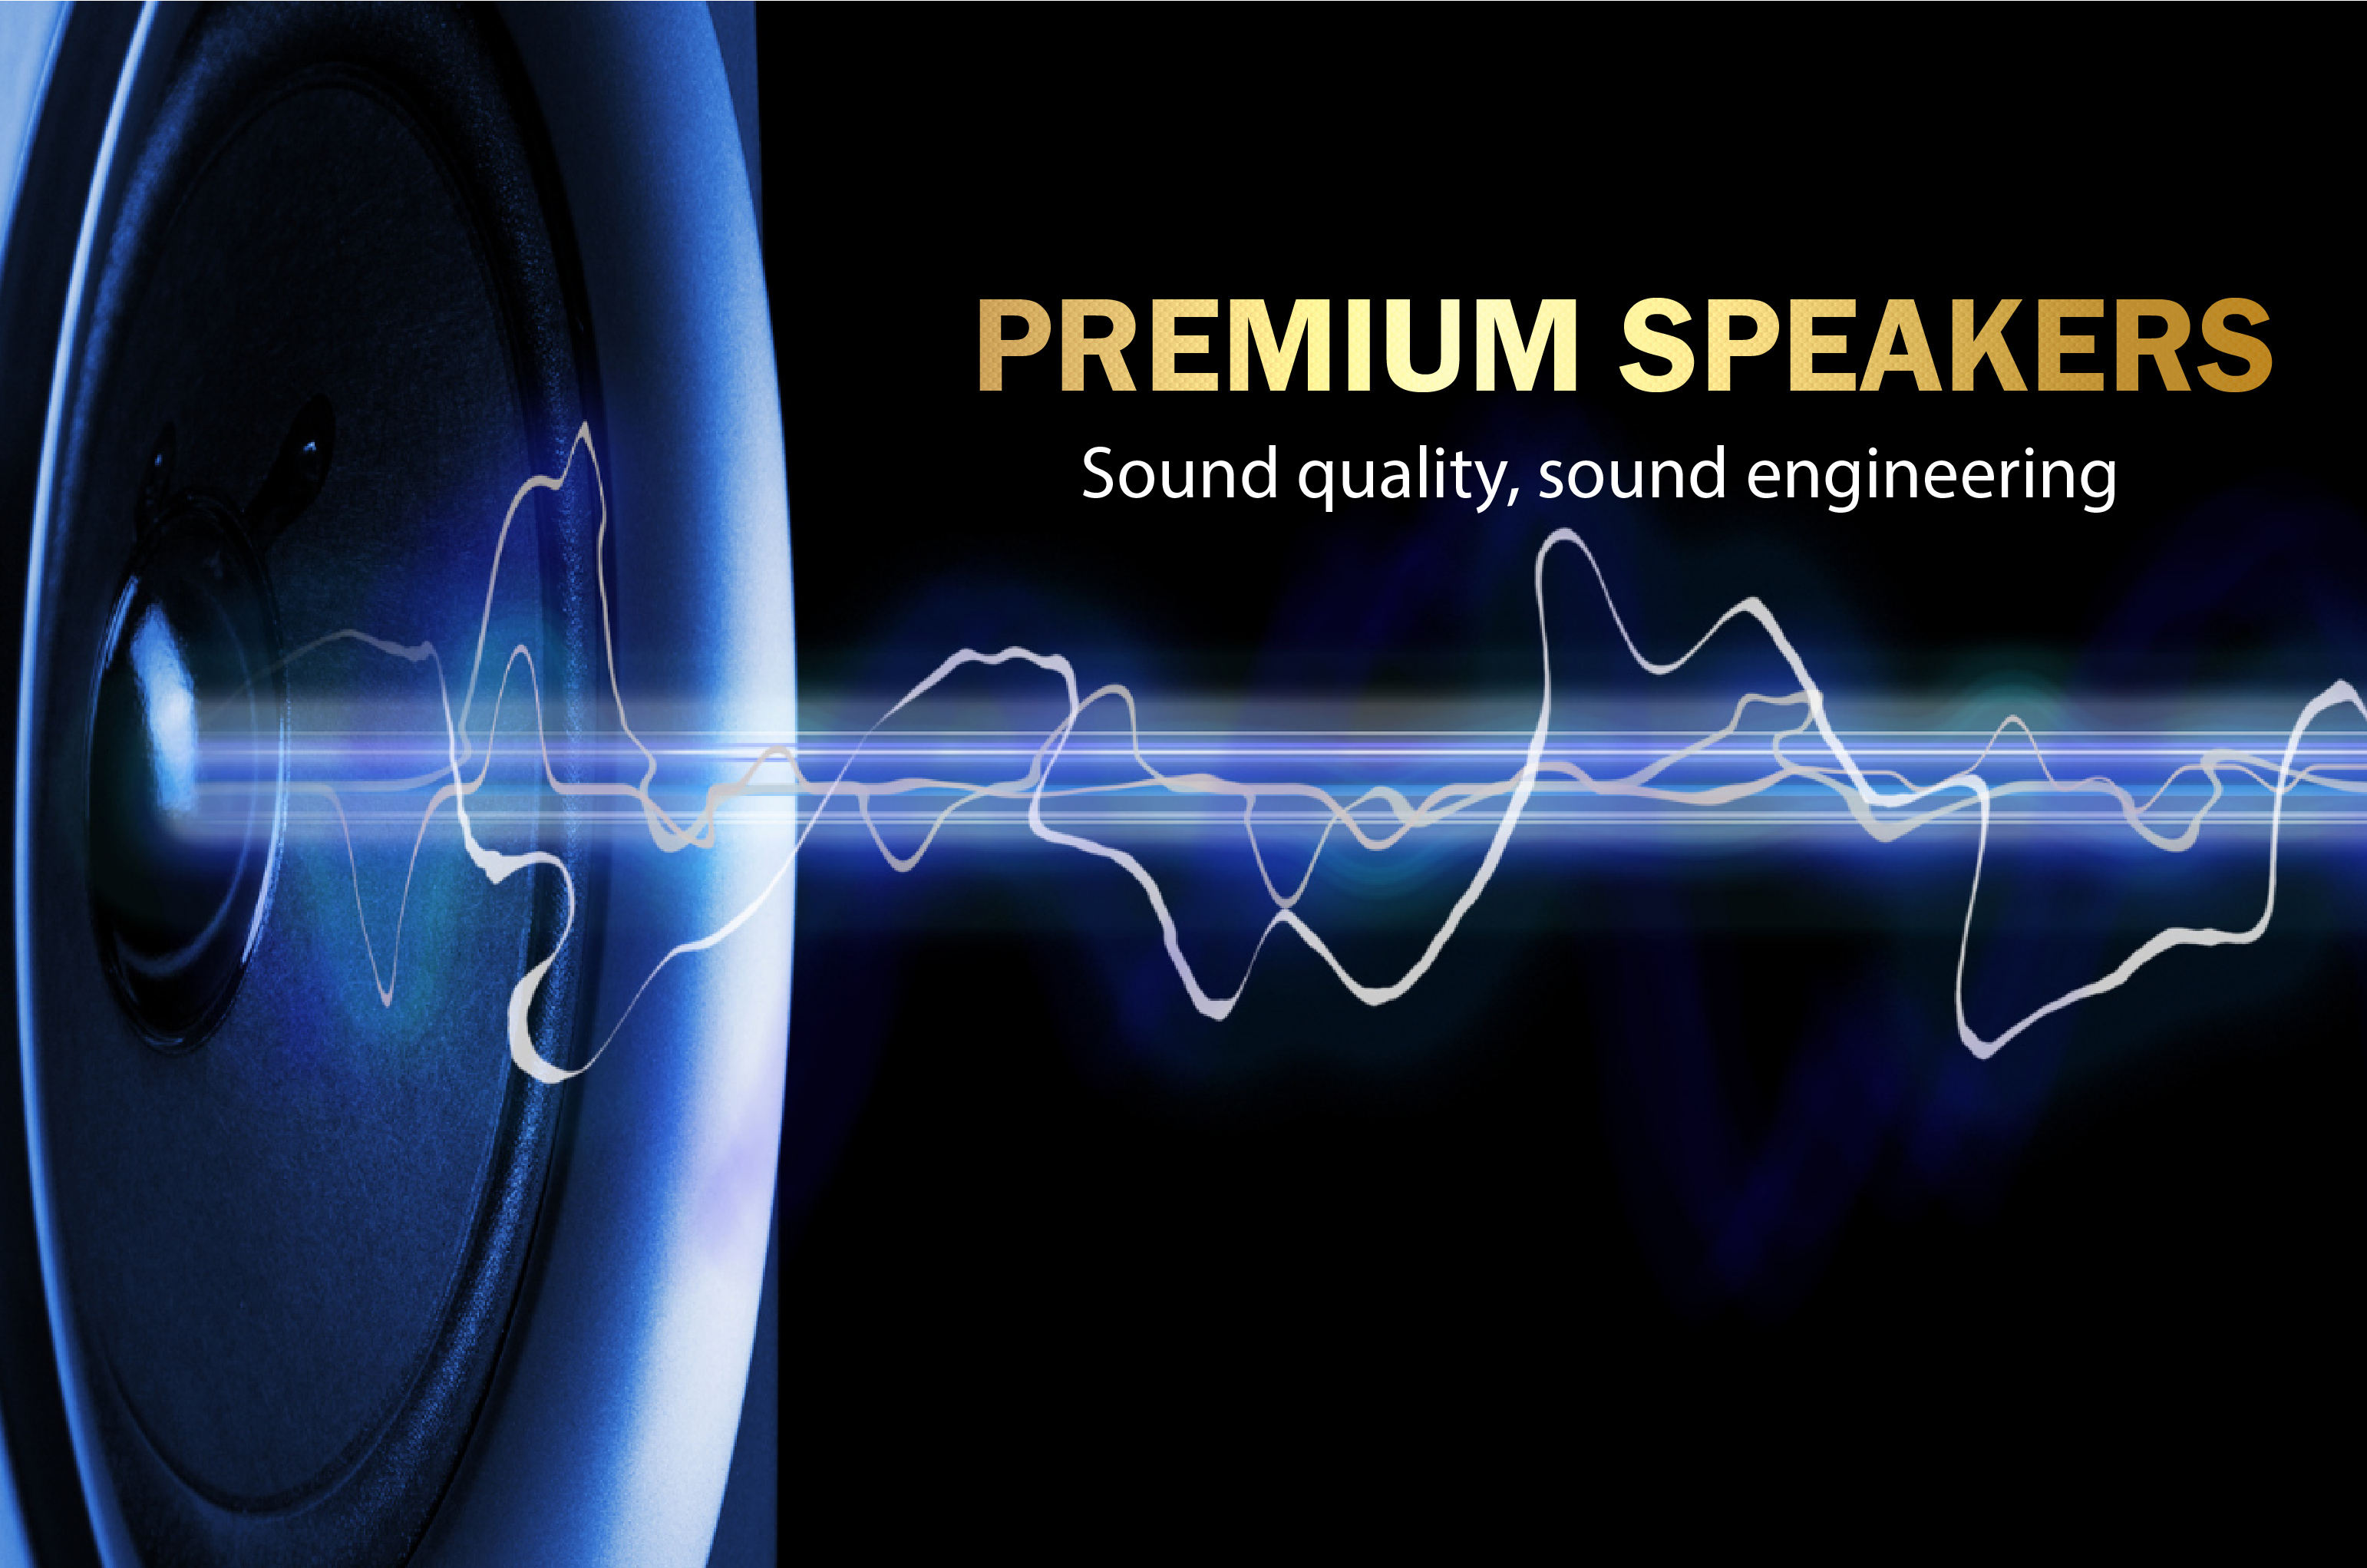 Premium Speakers - sound quality, sound engineering.